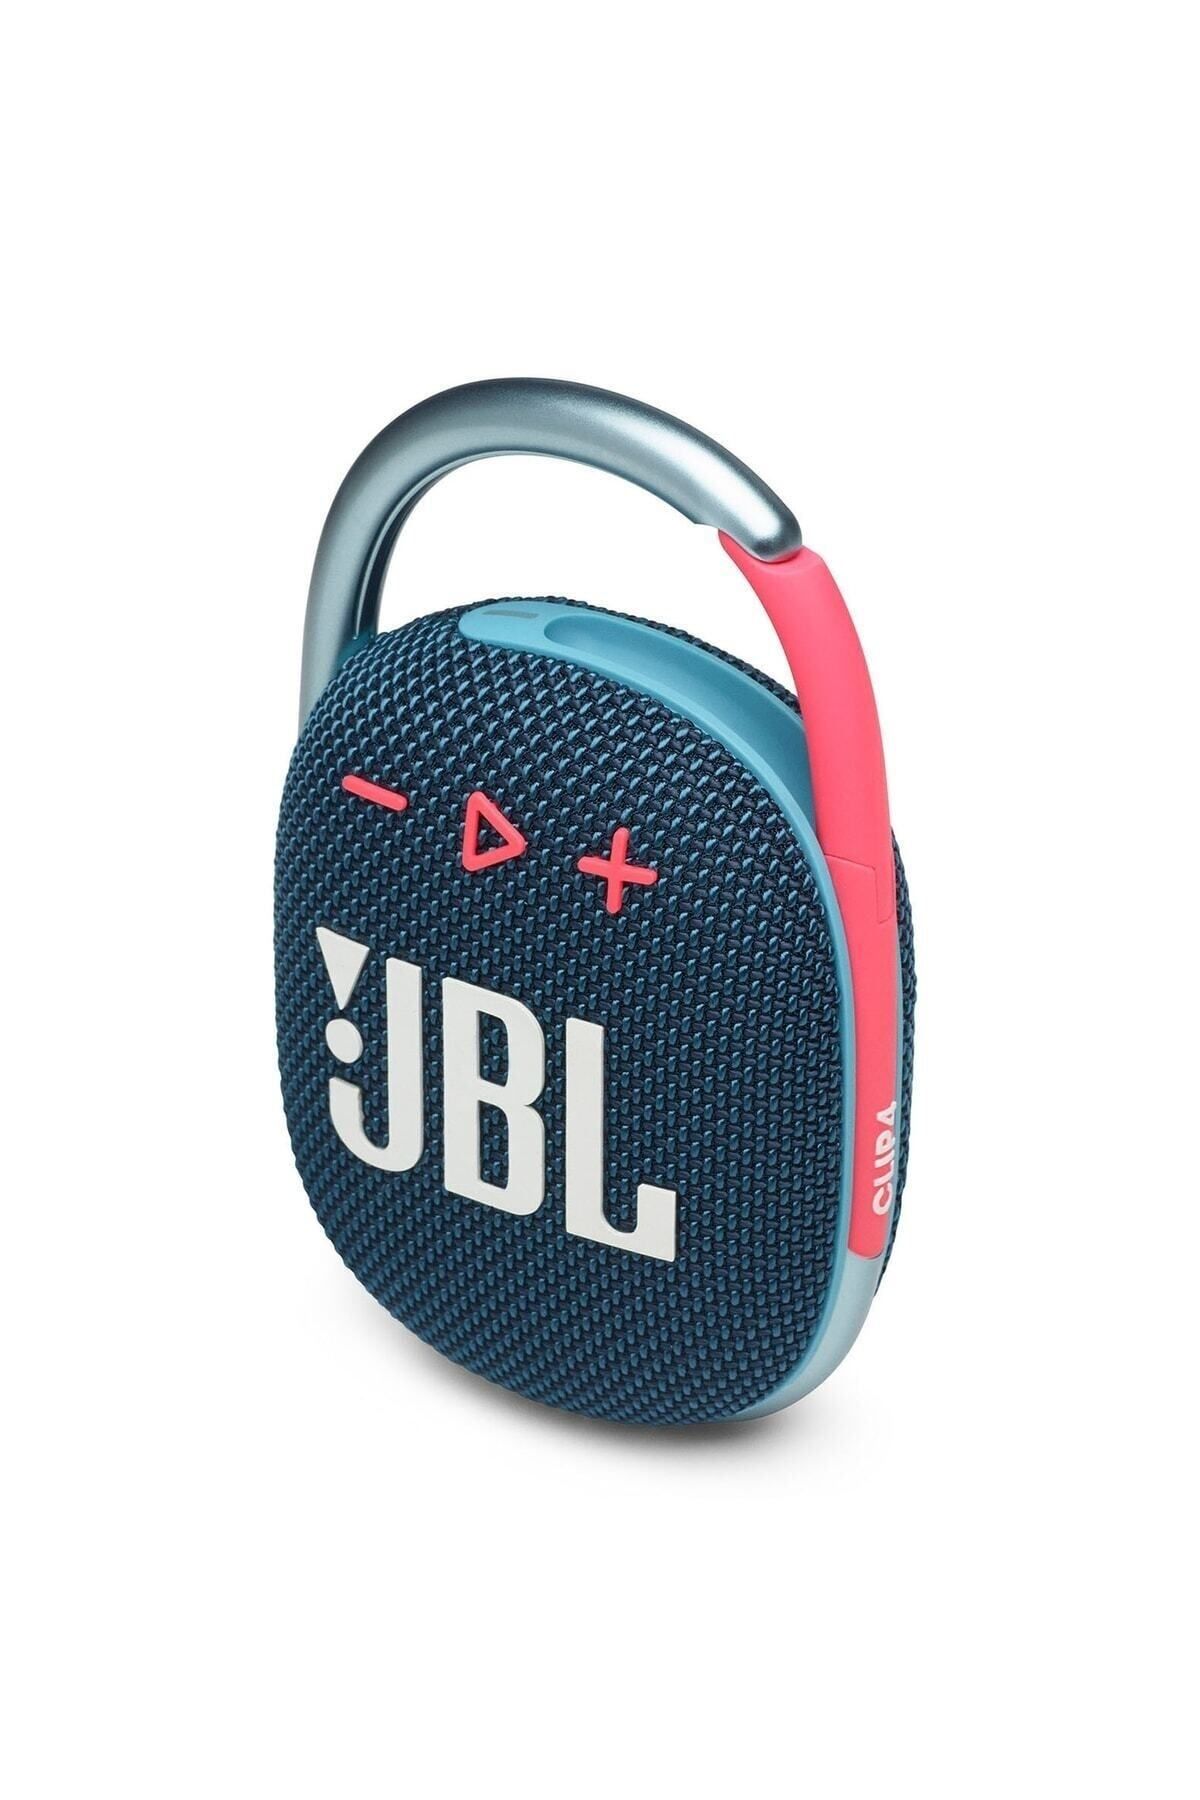 JBL Clip 4 Taşınabilir Hoparlör - Mavi / Pembe